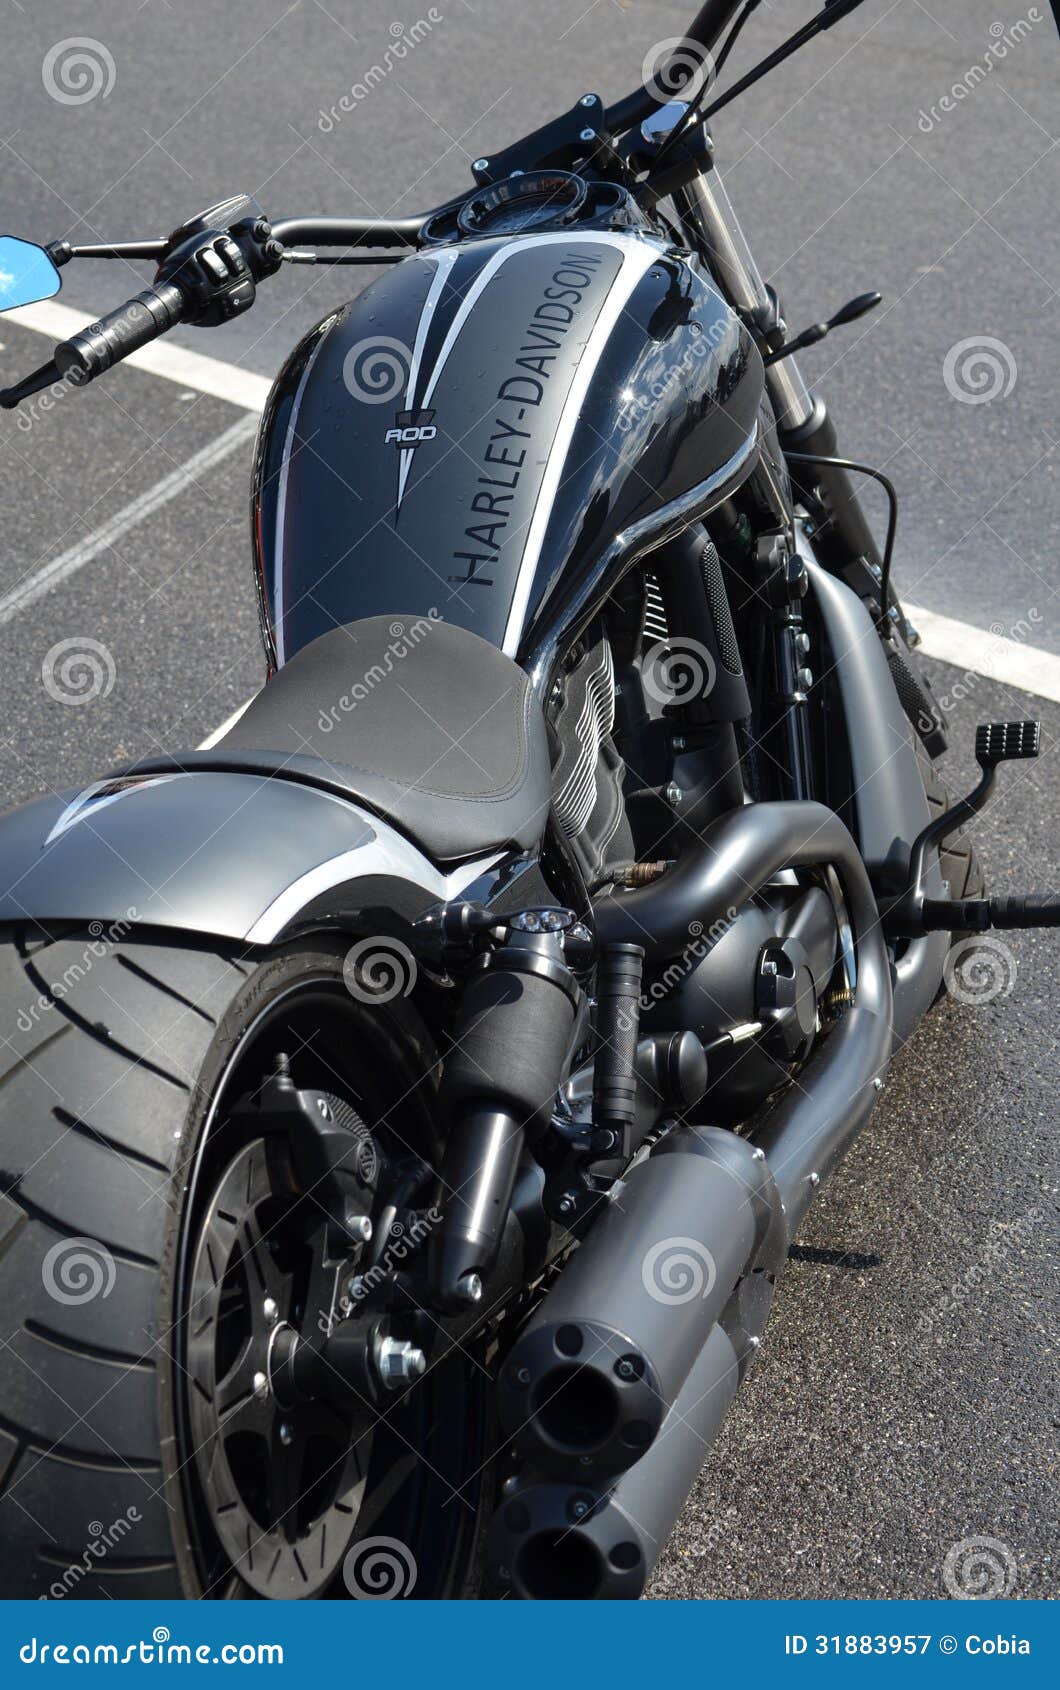 Harley Davidson Days In Hamburg Germany Editorial Photography Image Of Custom Davidson 31883957